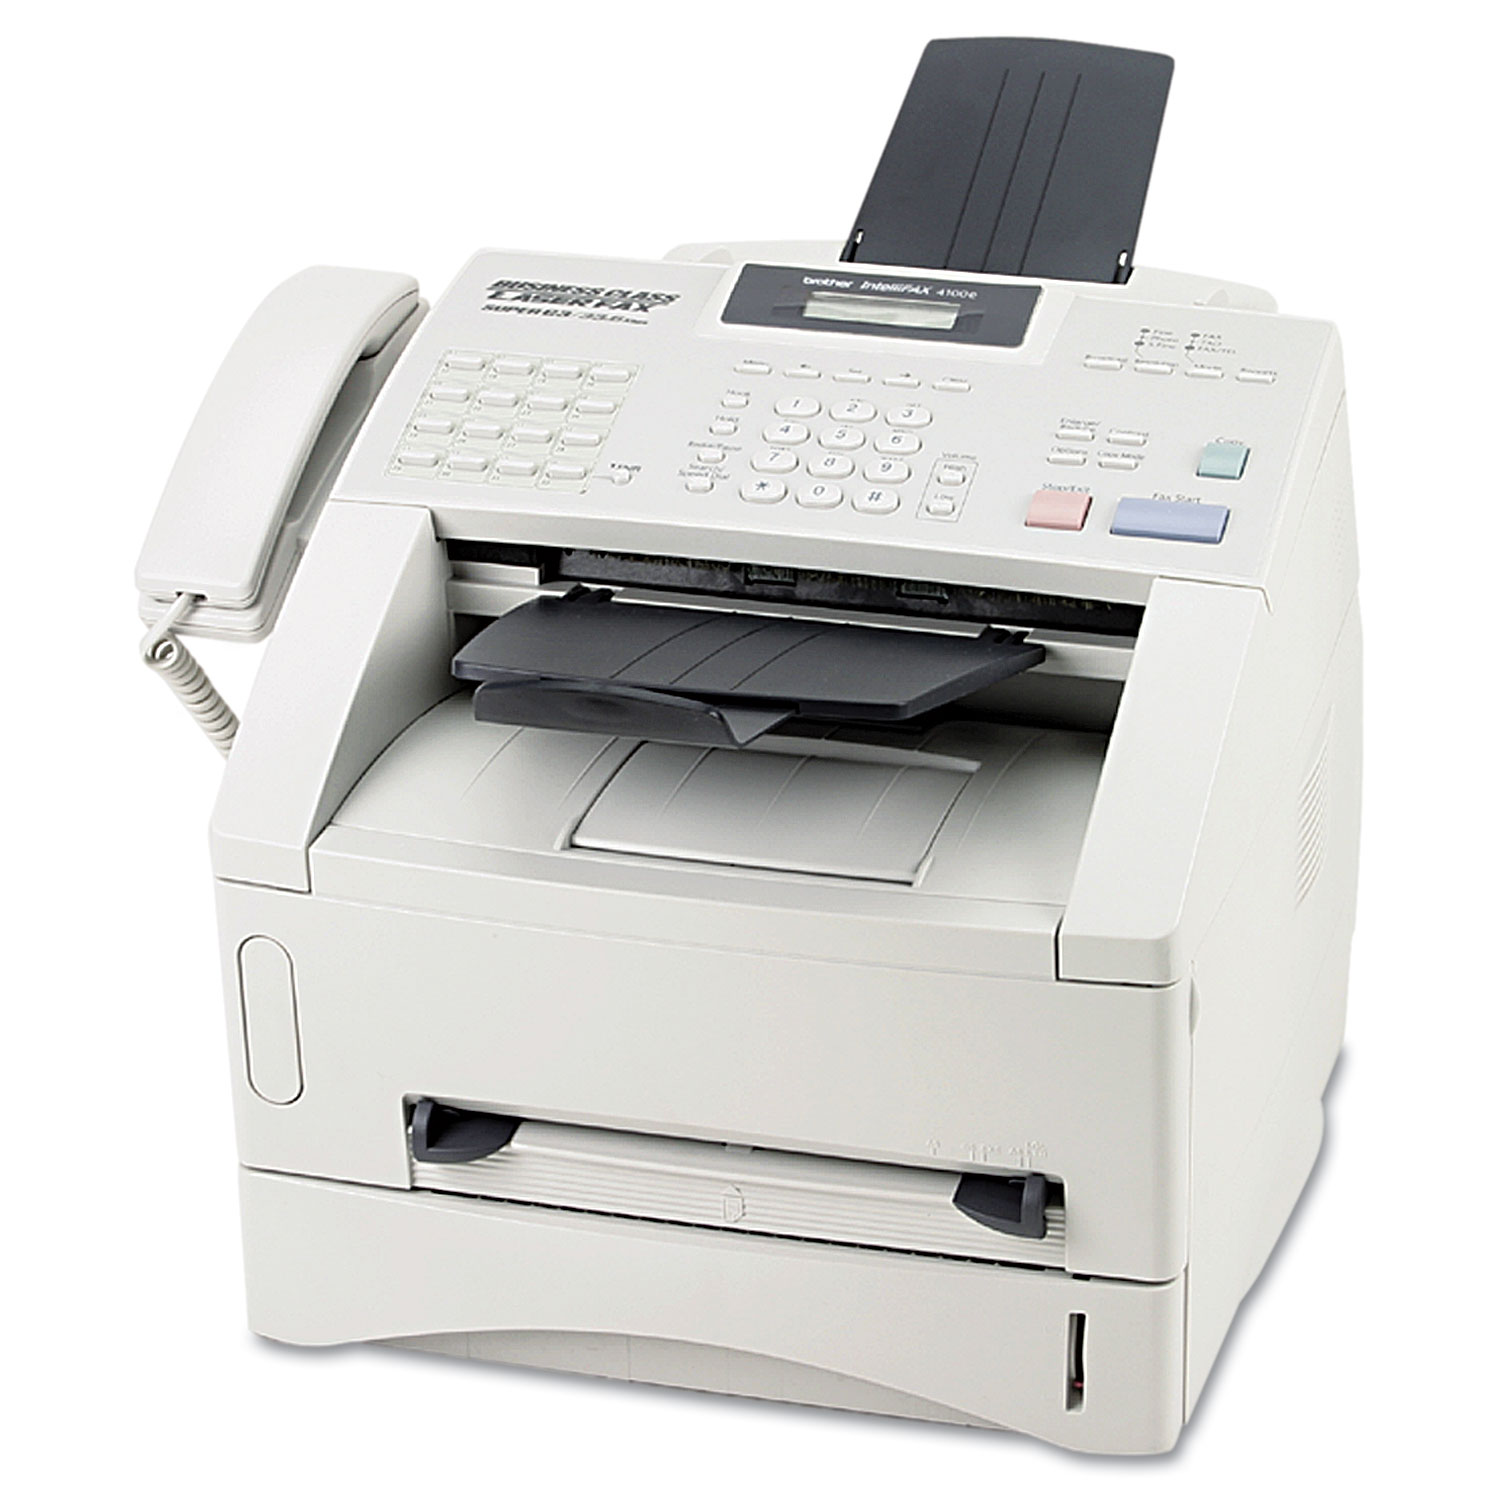 intelliFAX-4100e Business-Class Laser Fax Machine, Copy/Fax/Print